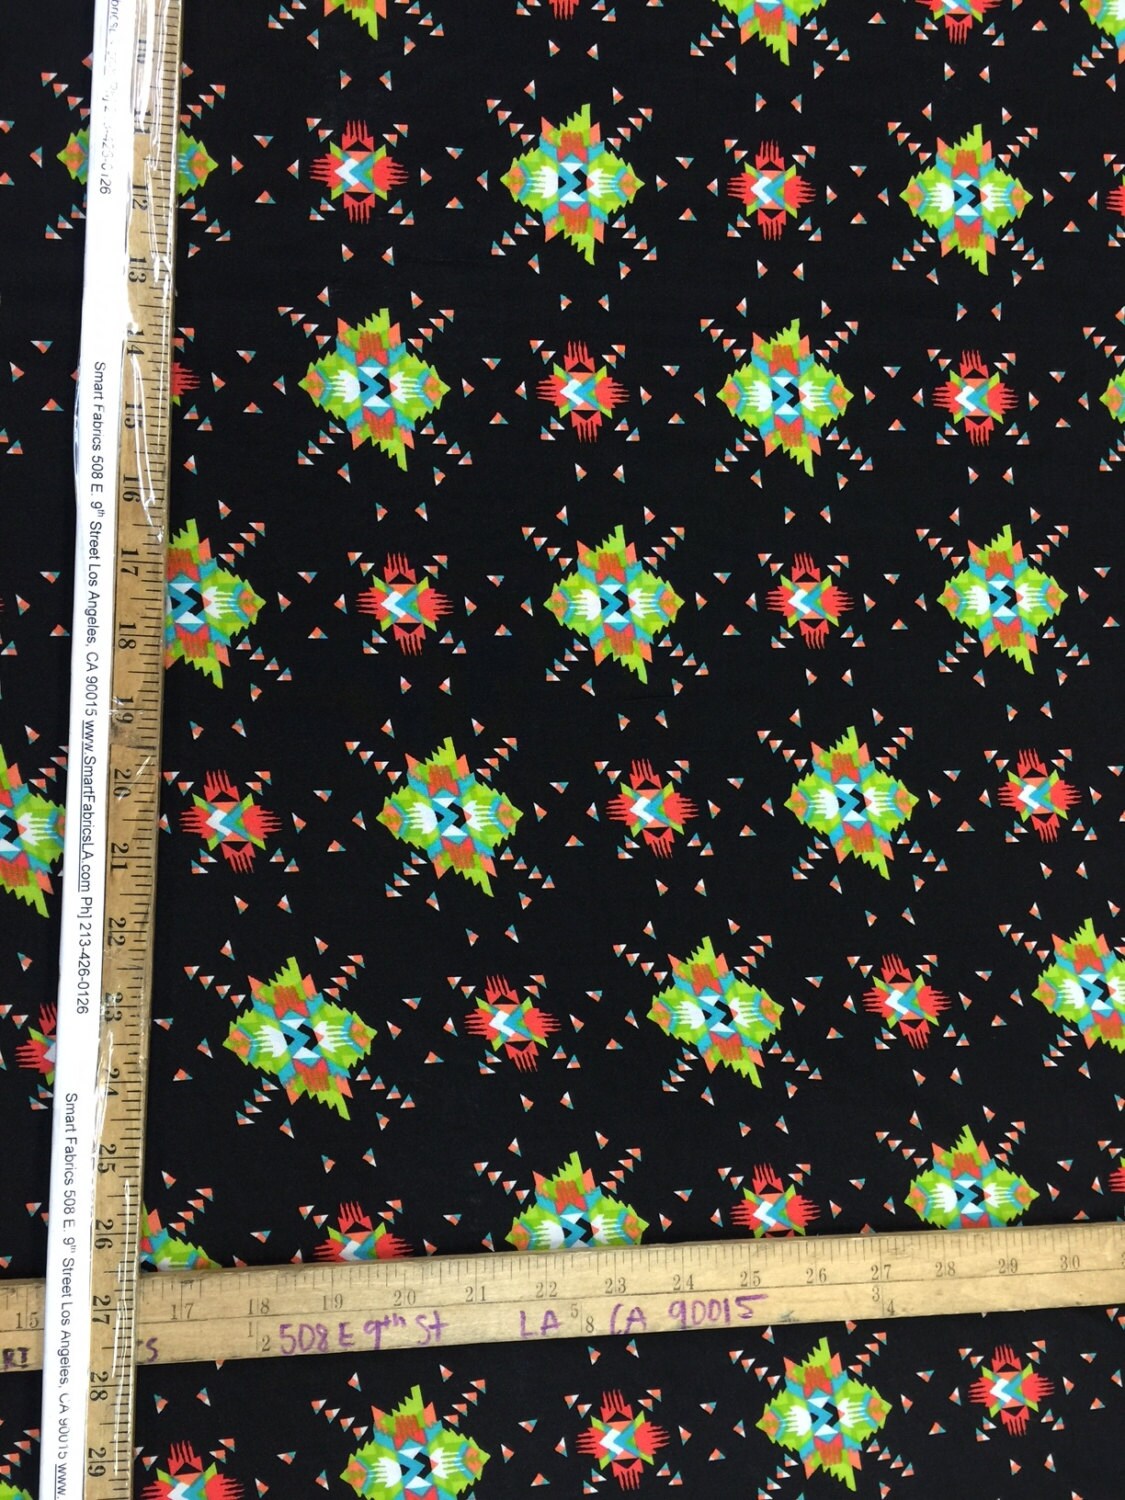 100% rayon challis. Black Native American inspired print. Fabric sold By the yard black green orange